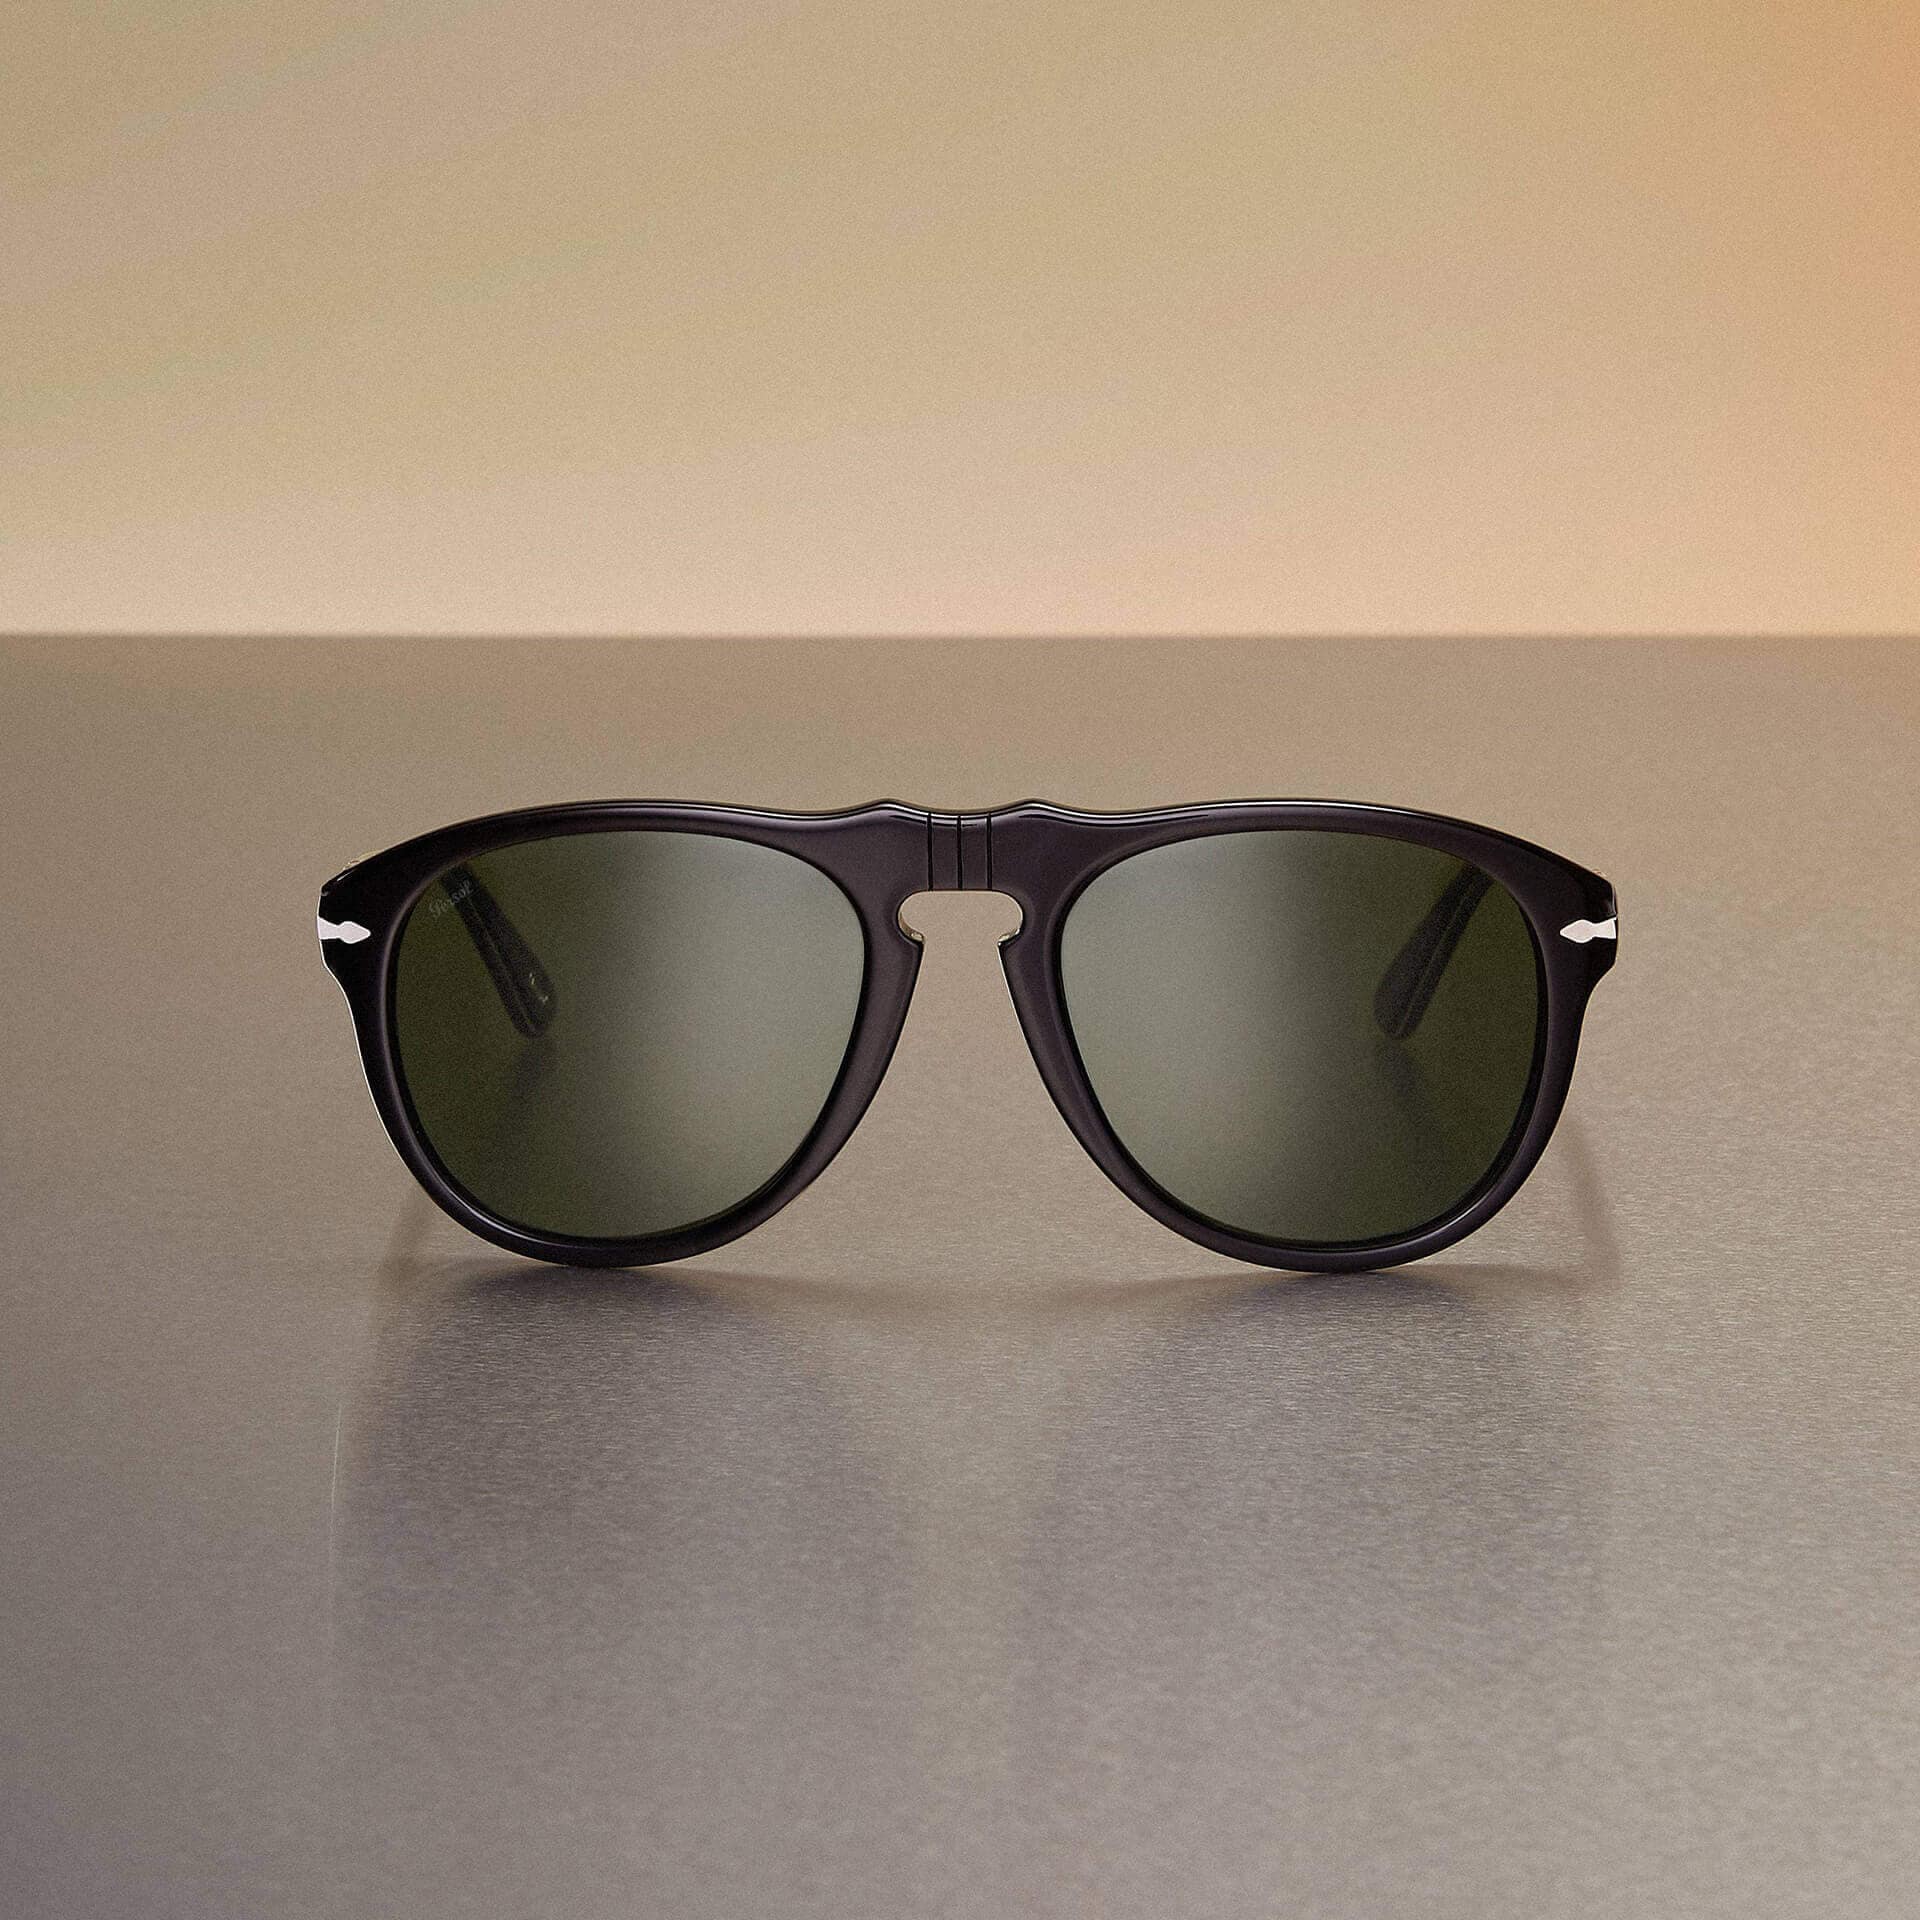 Promo sunglasses image